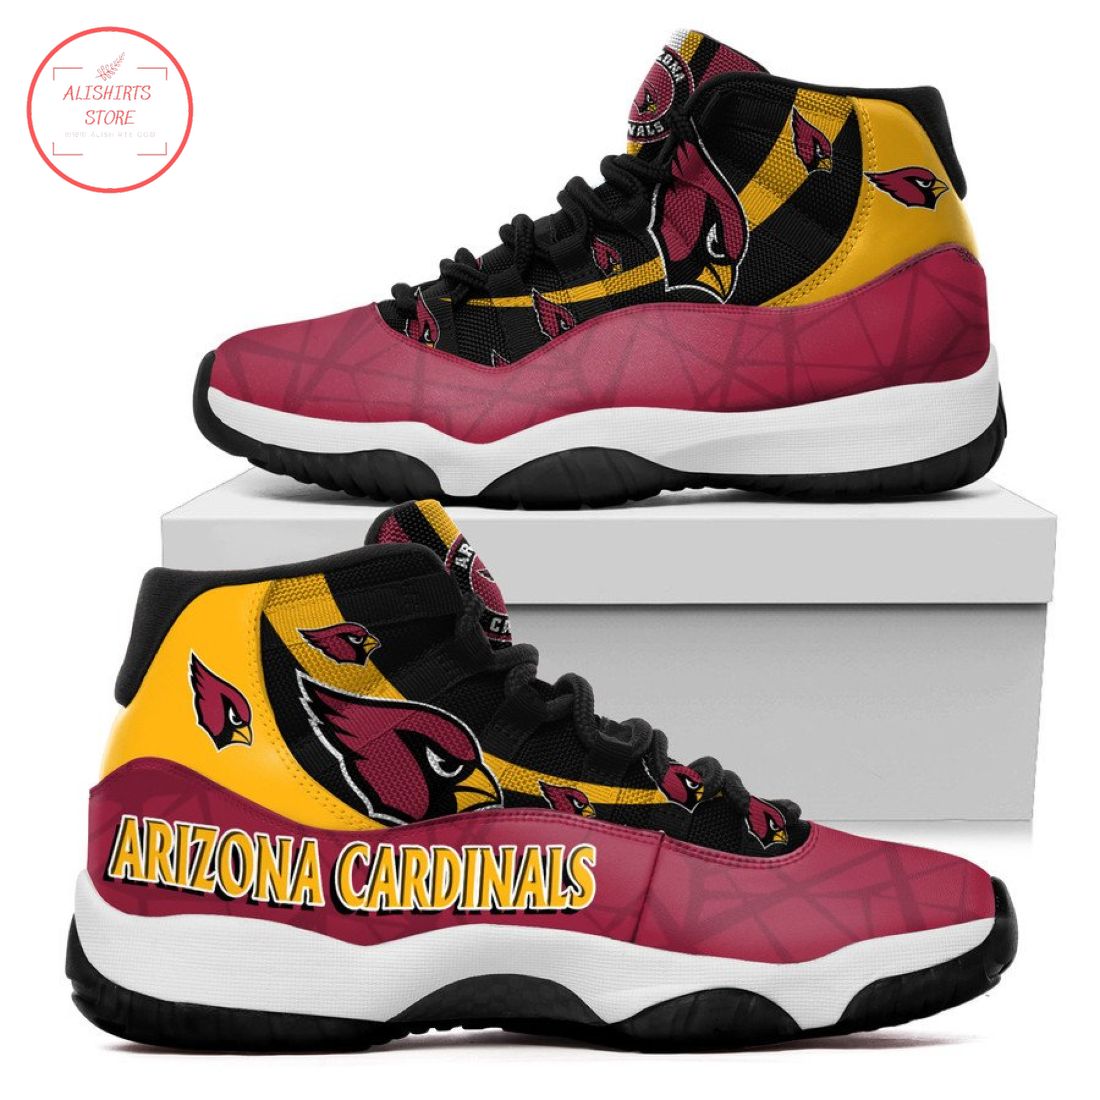 NFL Arizona Cardinals New Air Jordan 11 Sneakers Shoes